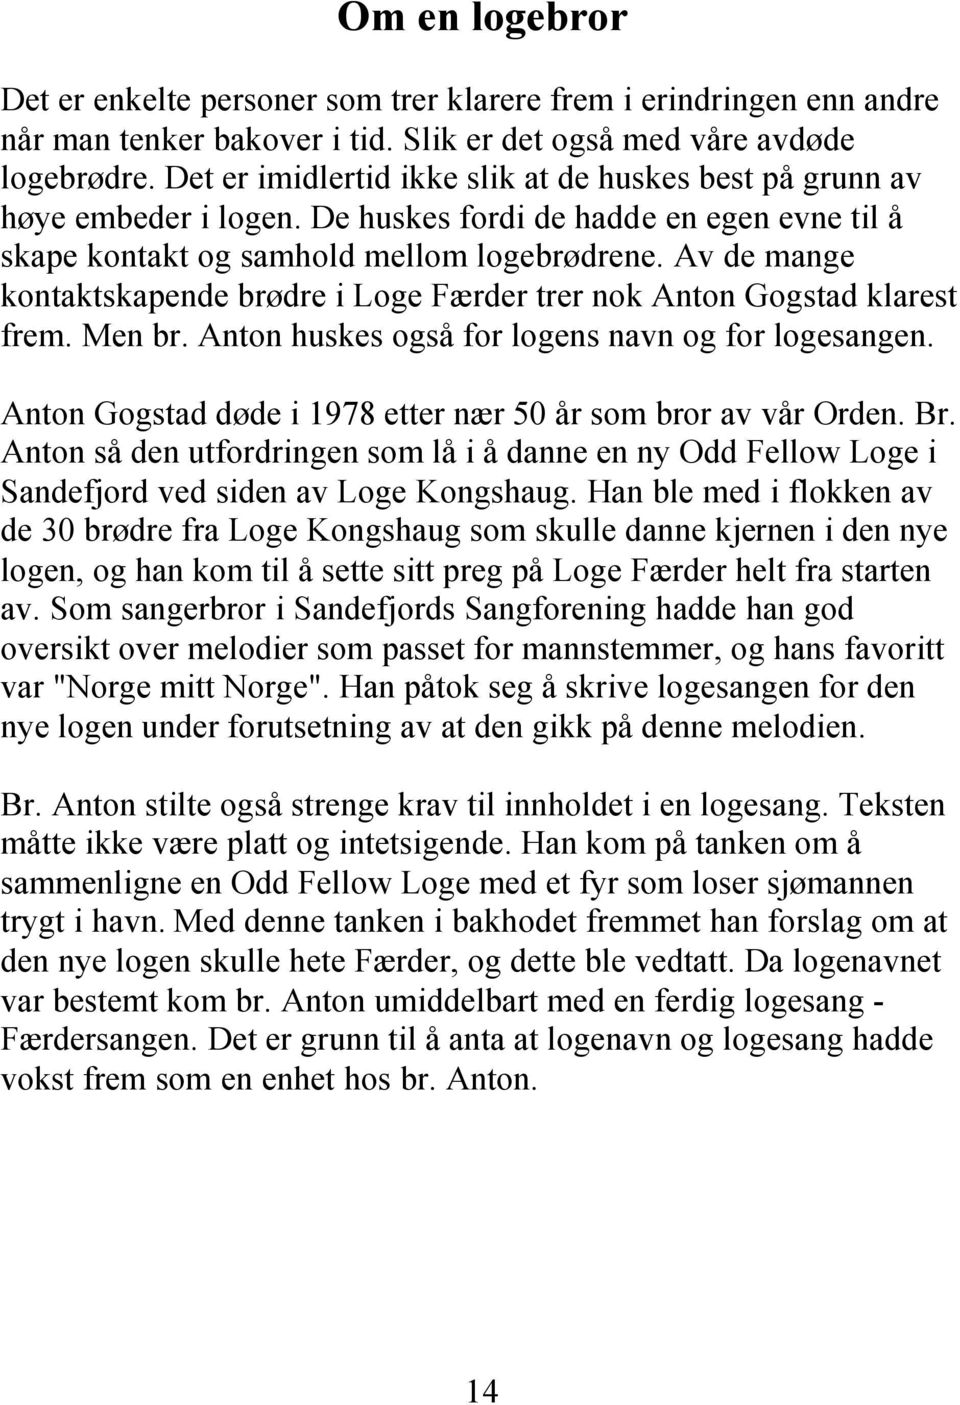 Av de mange kontaktskapende brødre i Loge Færder trer nok Anton Gogstad klarest frem. Men br. Anton huskes også for logens navn og for logesangen.